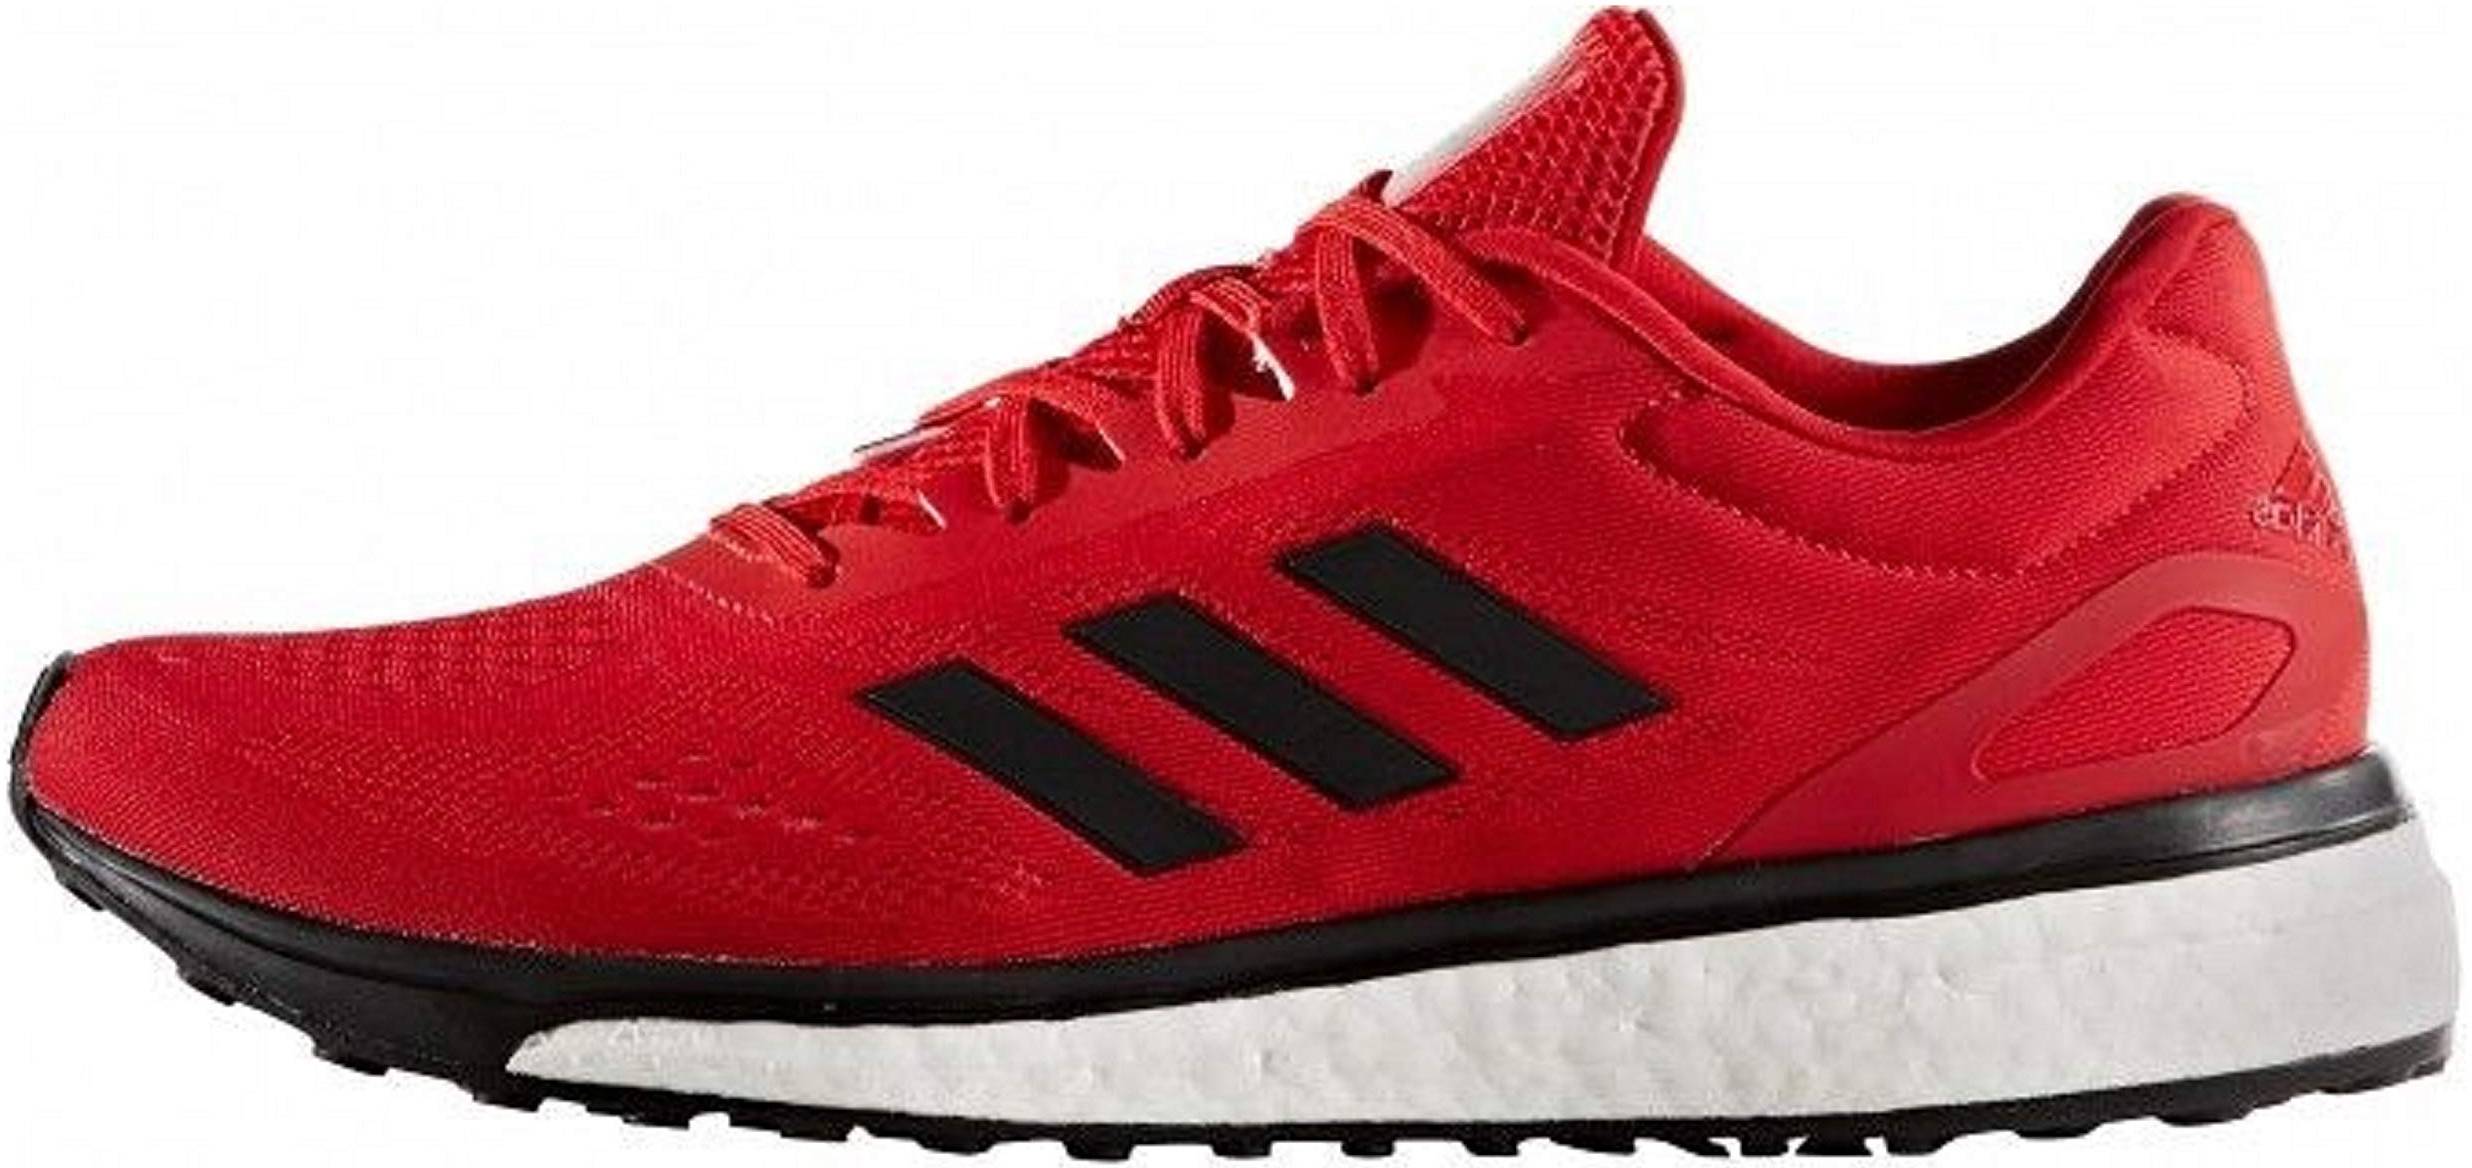 adidas response run mens running shoe